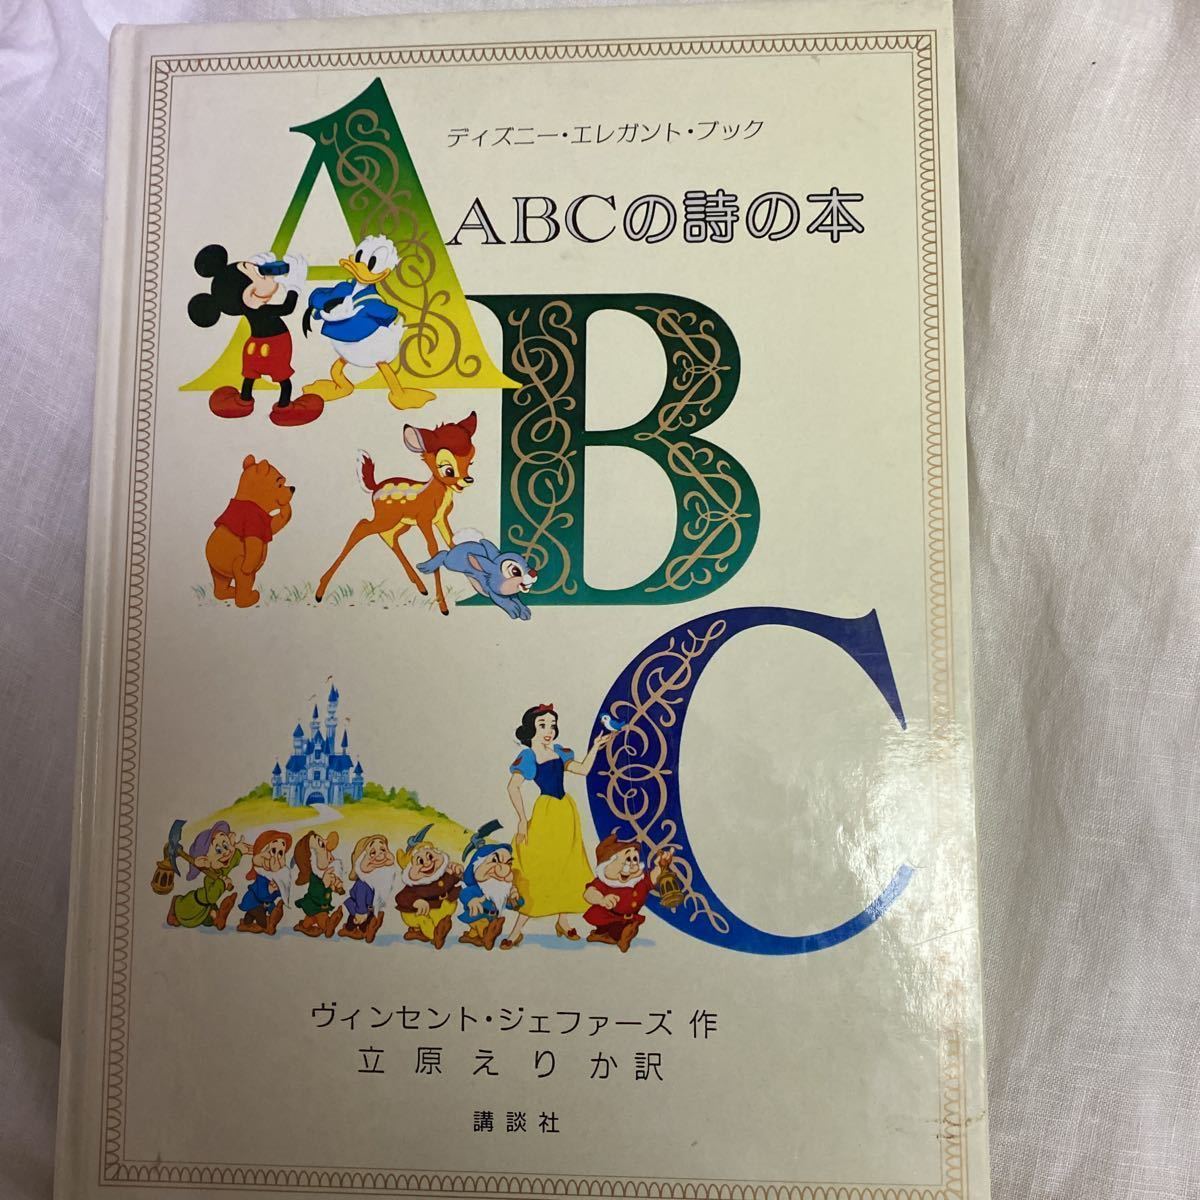  Disney elegant book ABC. poetry. book@.. company Mickey Alice south part. . character sinterela Pooh 